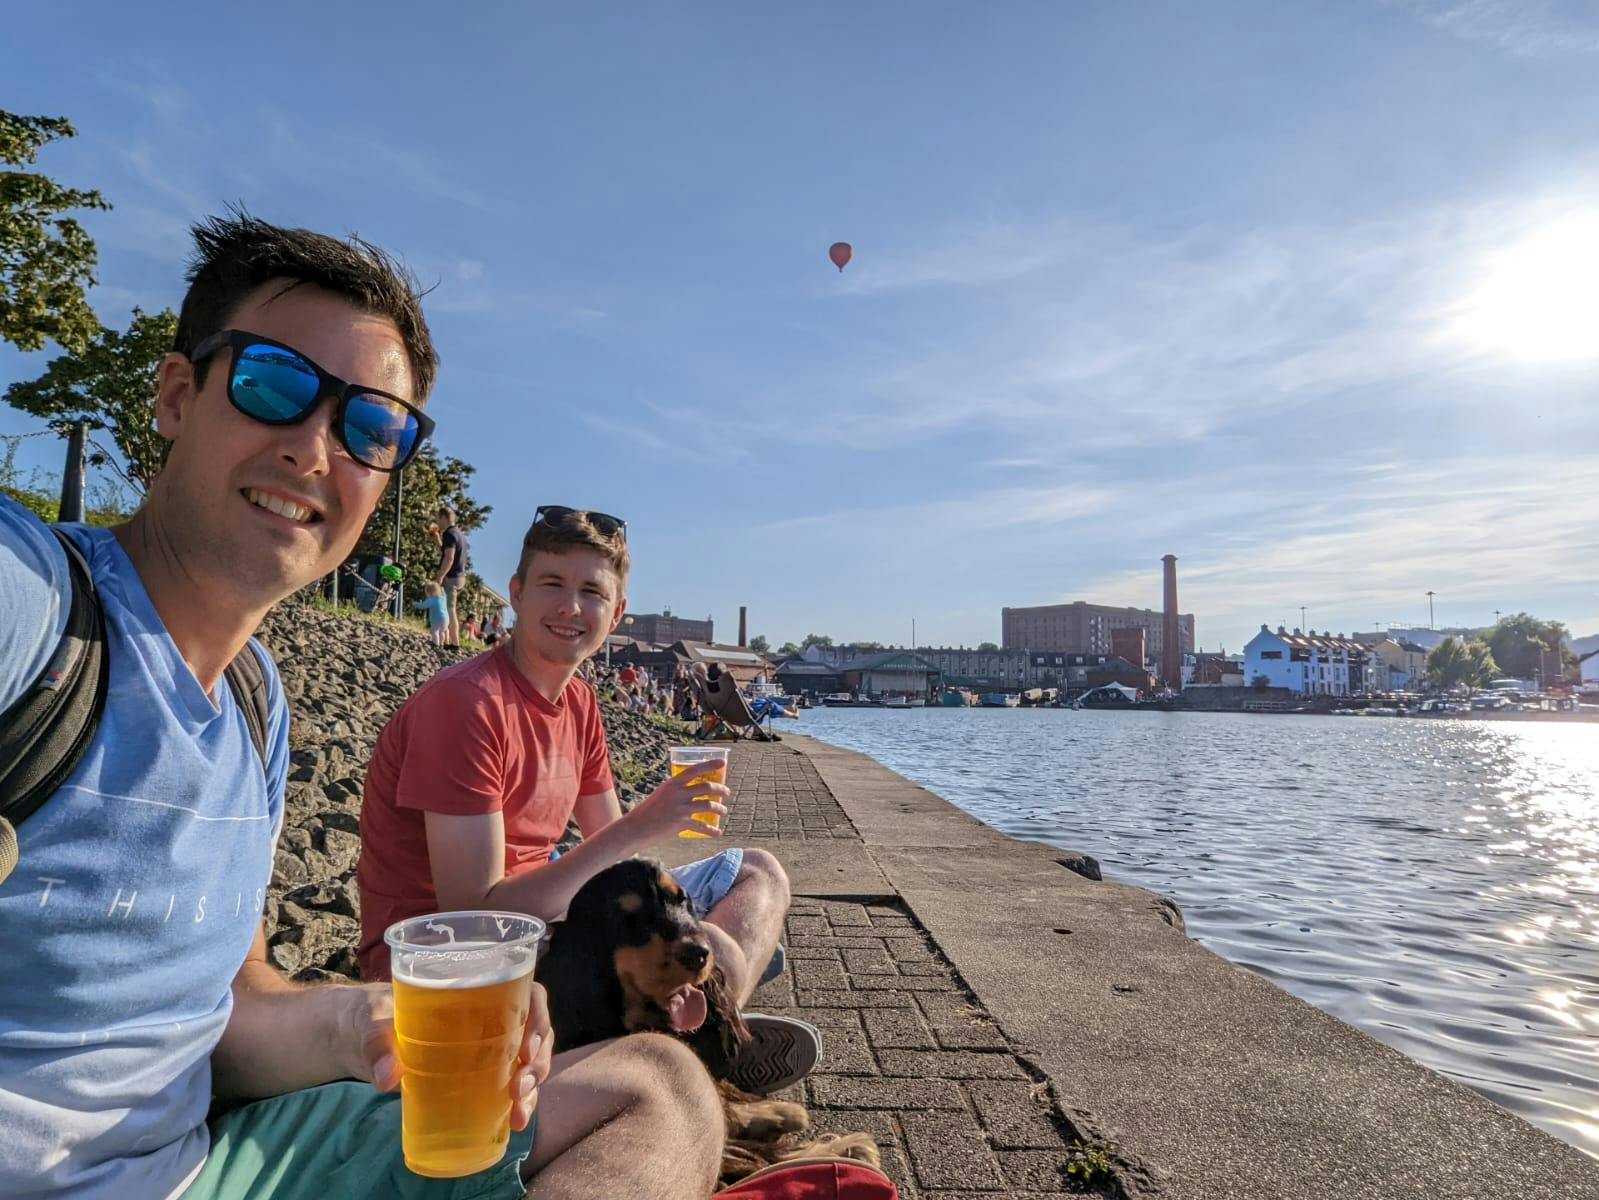 Myself, Stephen and Oscar the dog enjoying the Bristol Harbourside